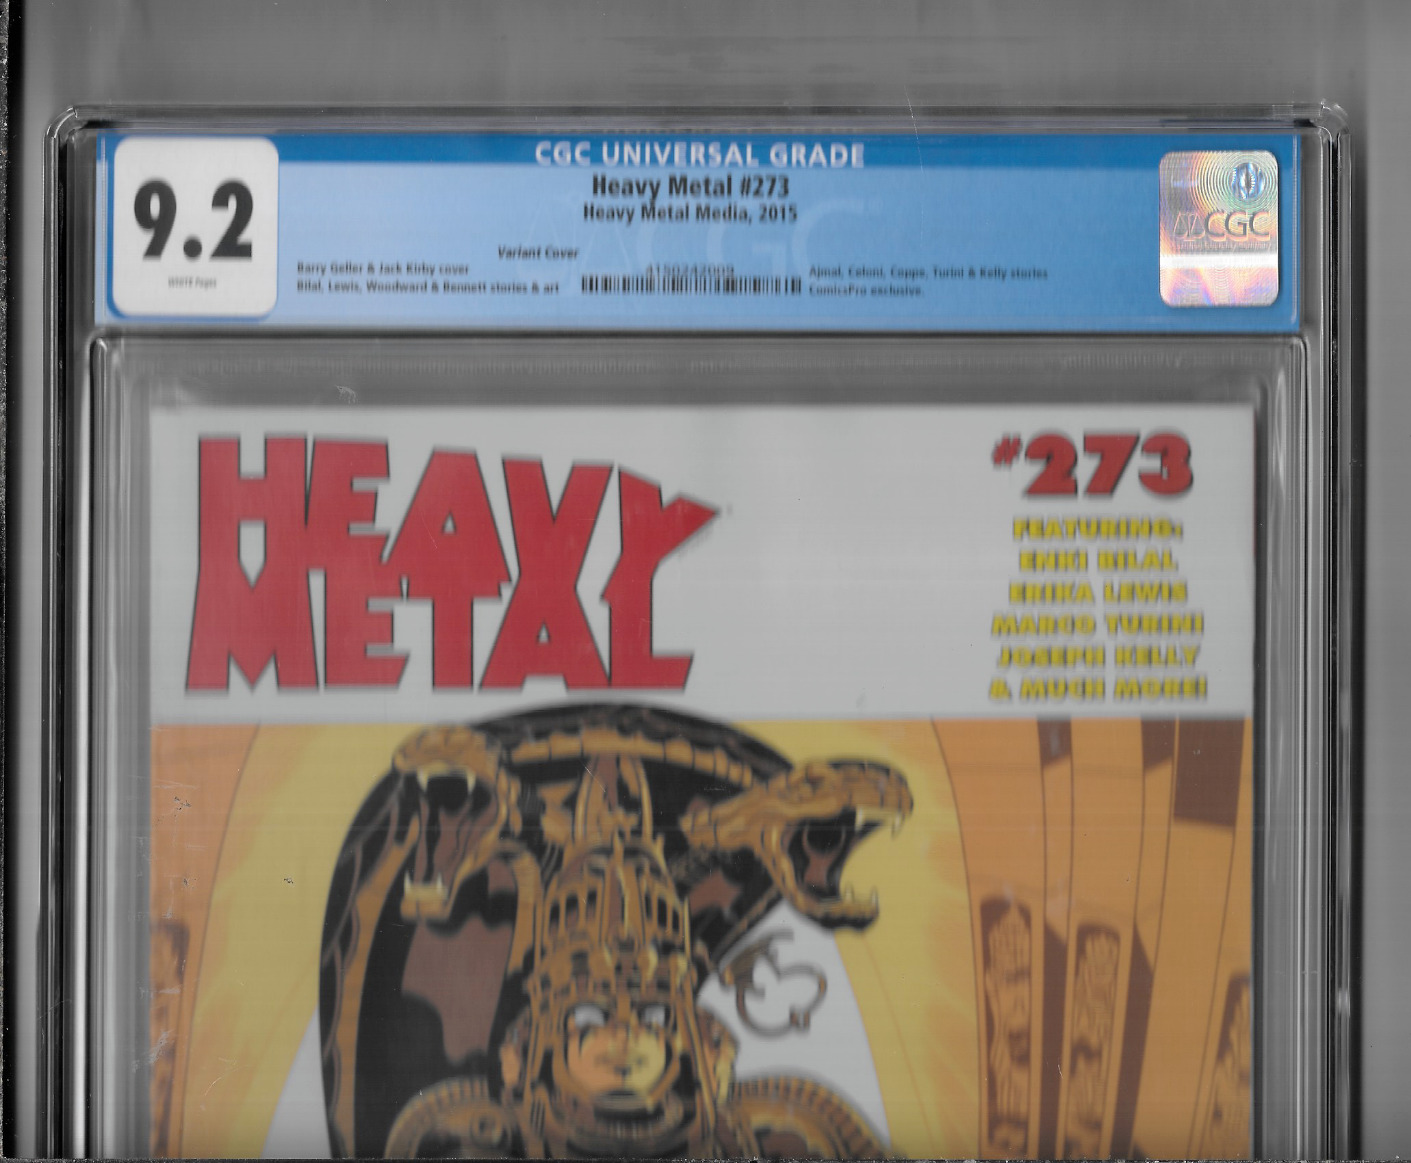 Heavy Metal Magazine #273 Comicspro 2015 Limited (500) Kirby Geller 9.2 CGC Case